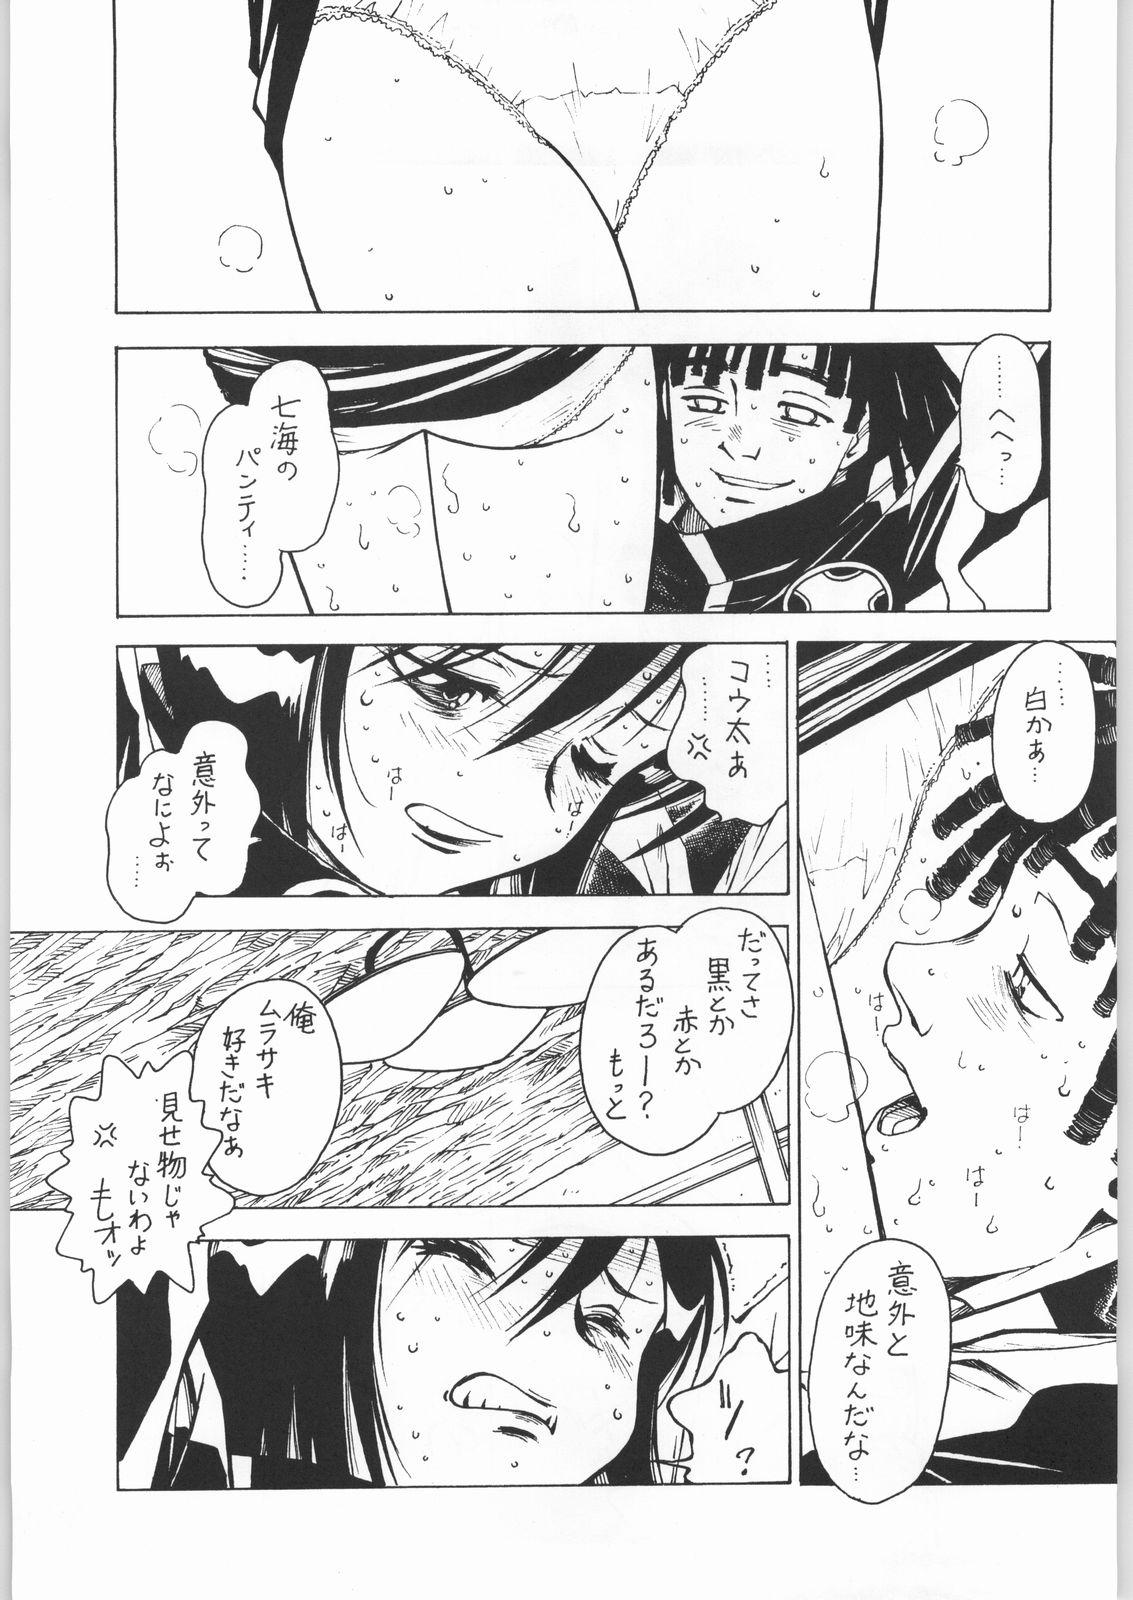 Assfucked Nanami Tougarashi - Ninpuu sentai hurricaneger Assfucked - Page 6